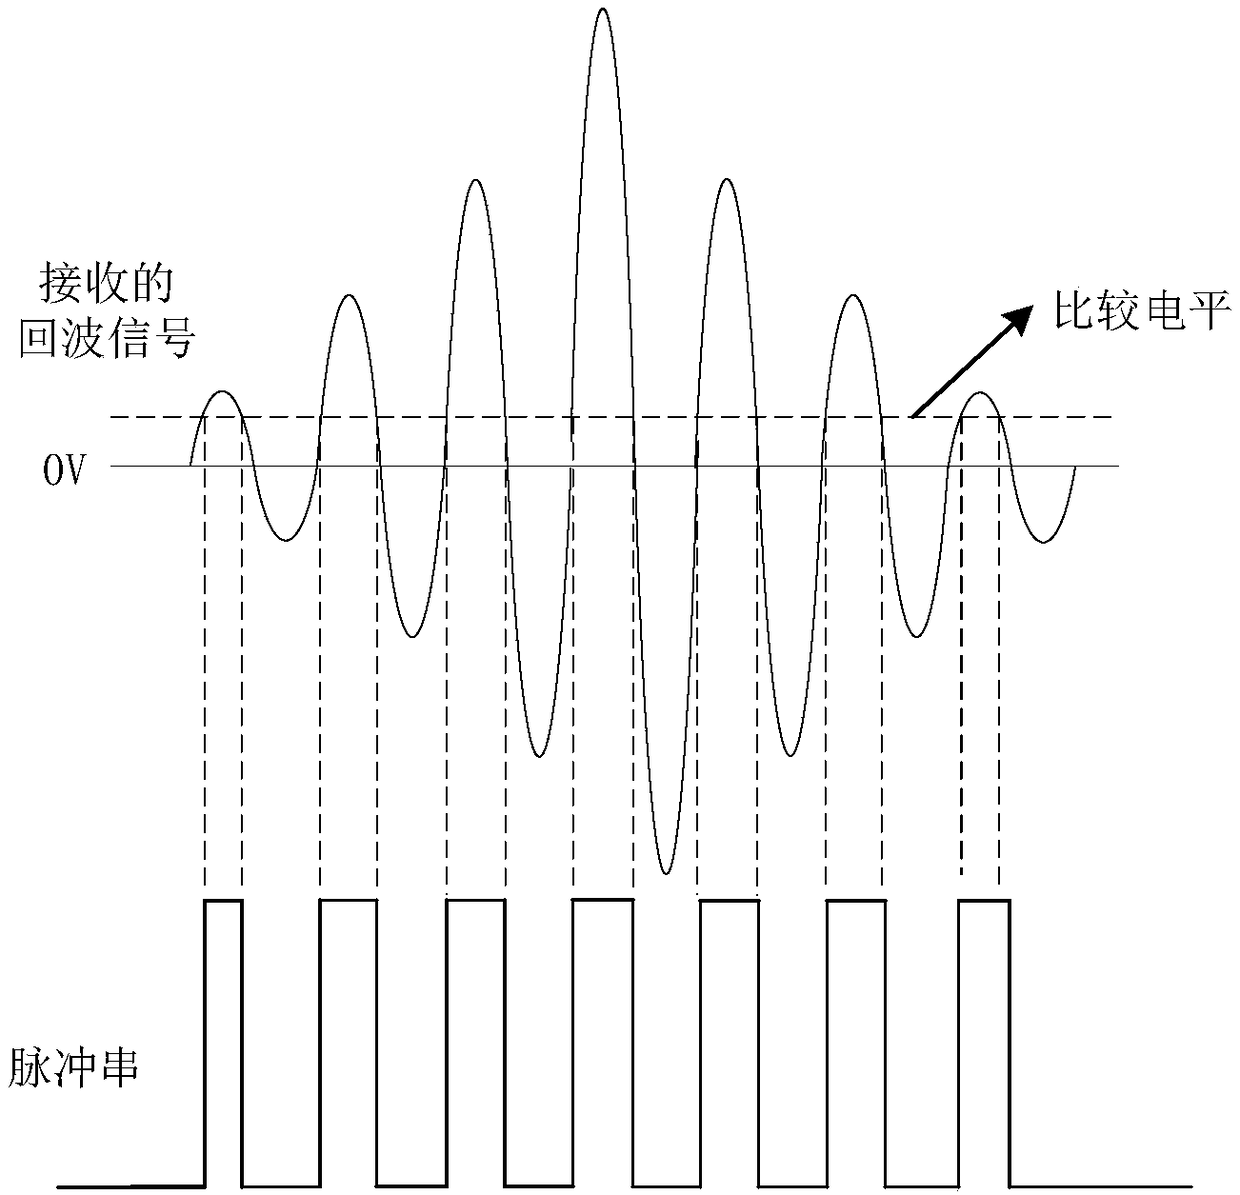 Echo signal detection circuit of adaptive ultrasonic wave